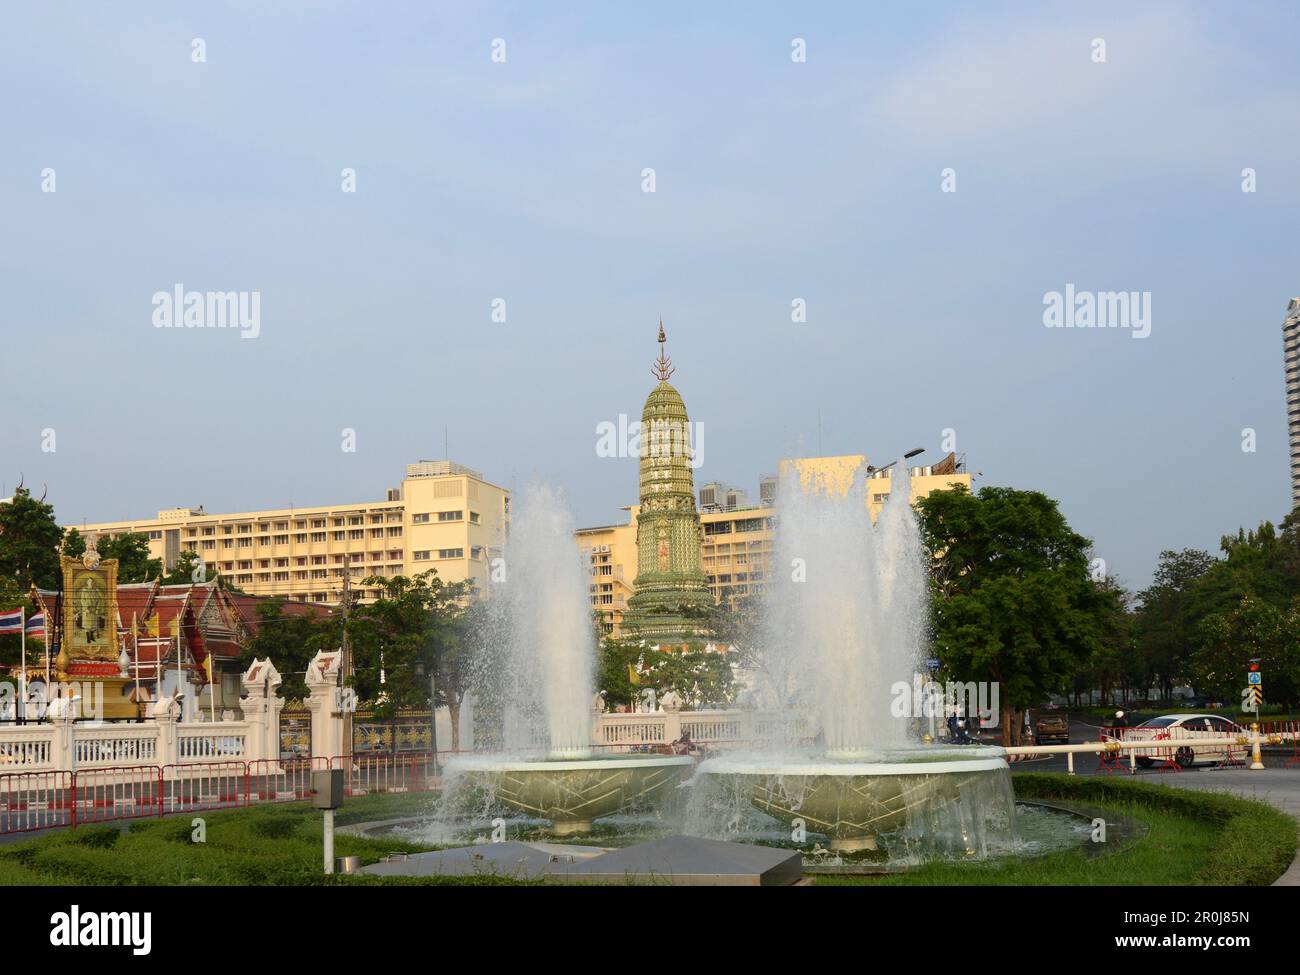 The prang ( Khmer style pagoda ) at the Wat Liap temple in Bangkok, Thailand. Stock Photo